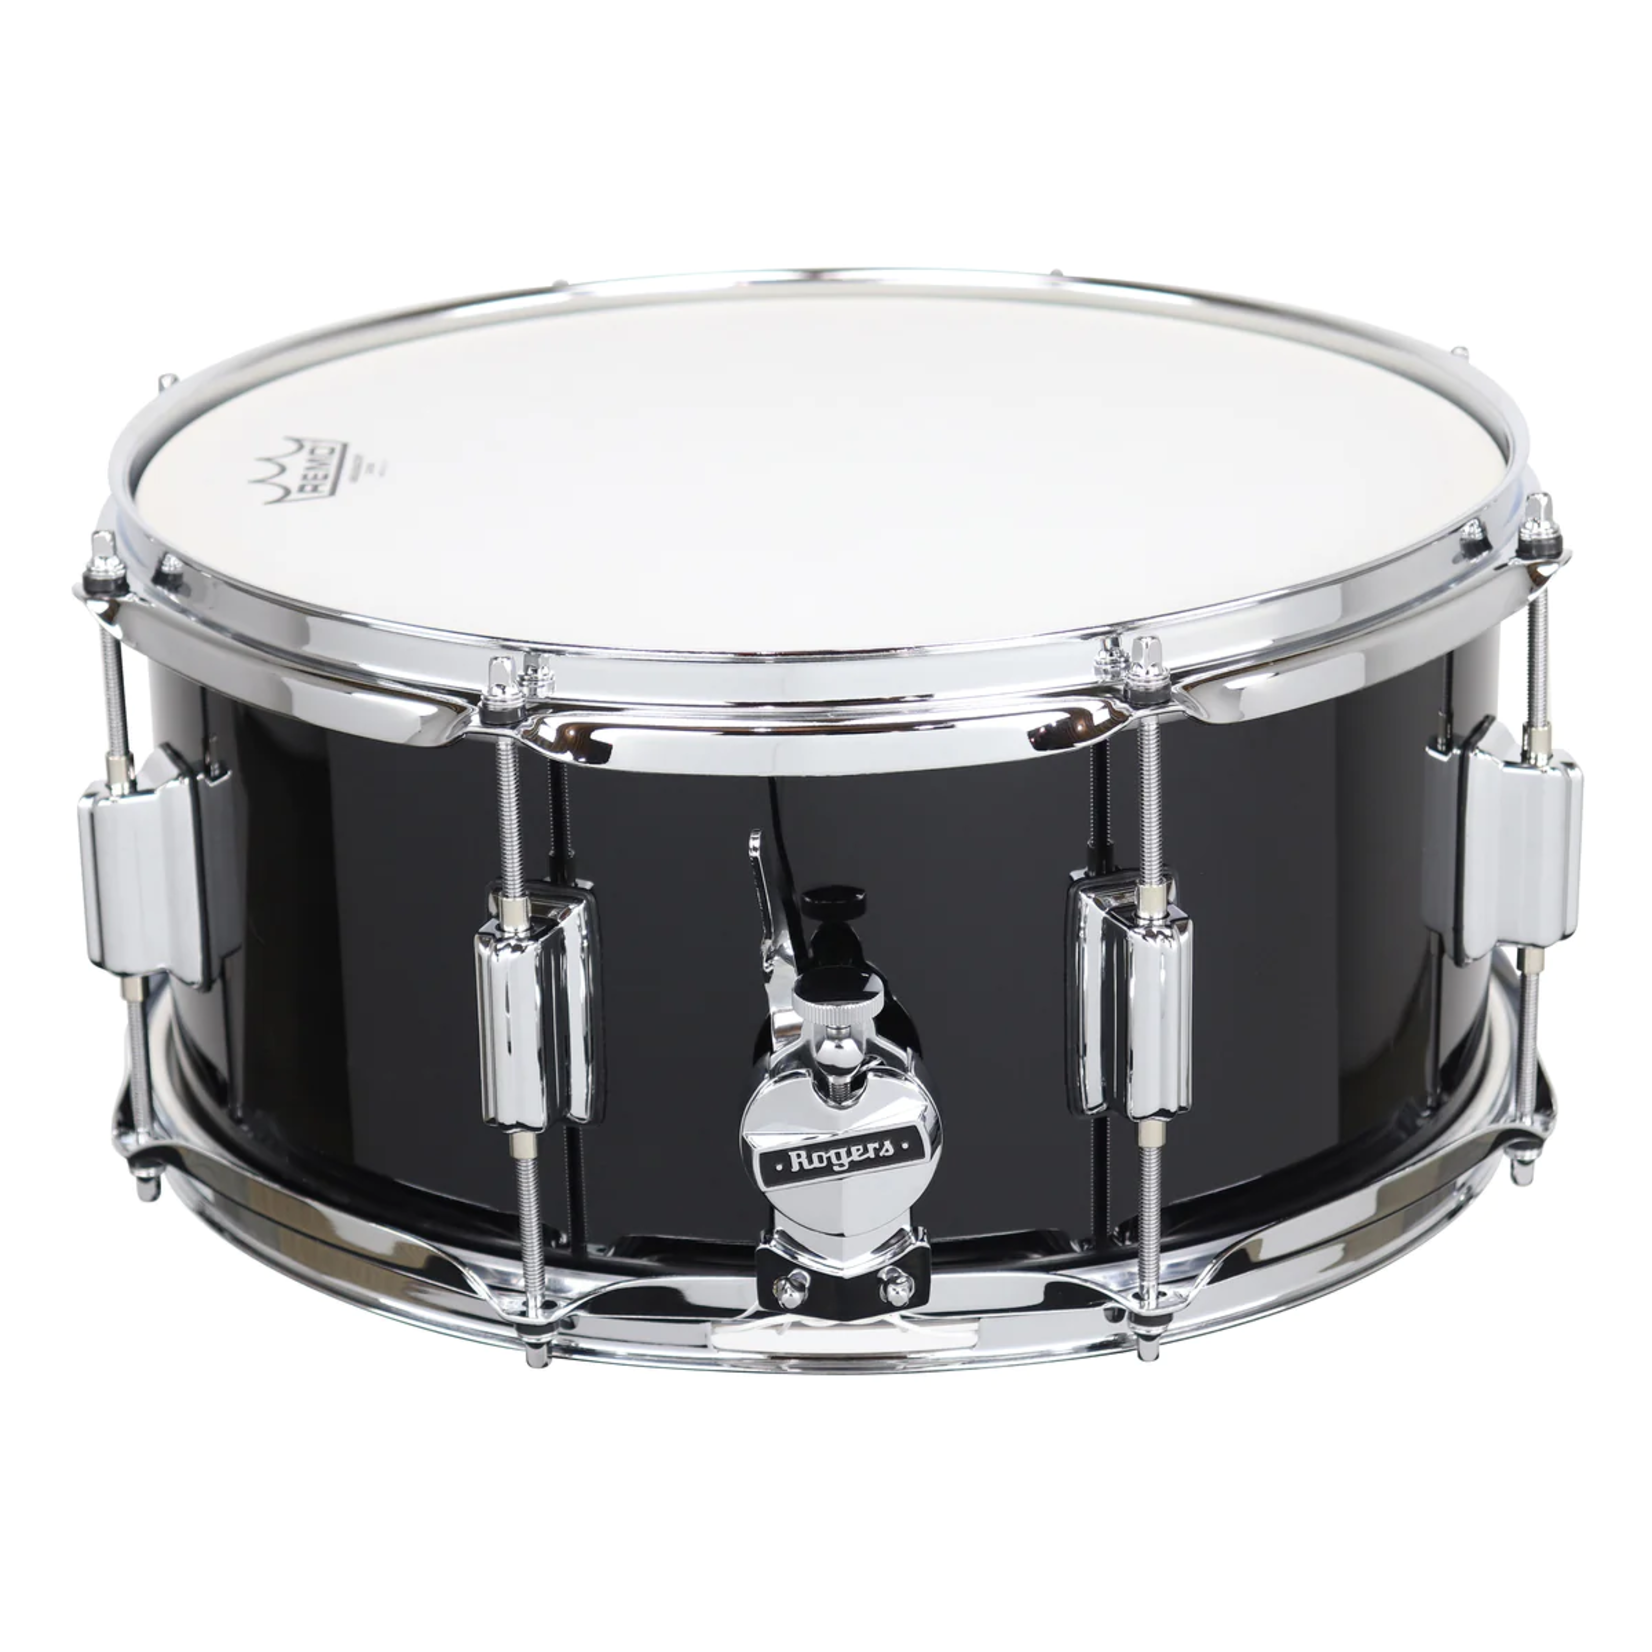 Rogers Rogers 6.5x14" Powertone Snare Drum (Piano Black) 26PB